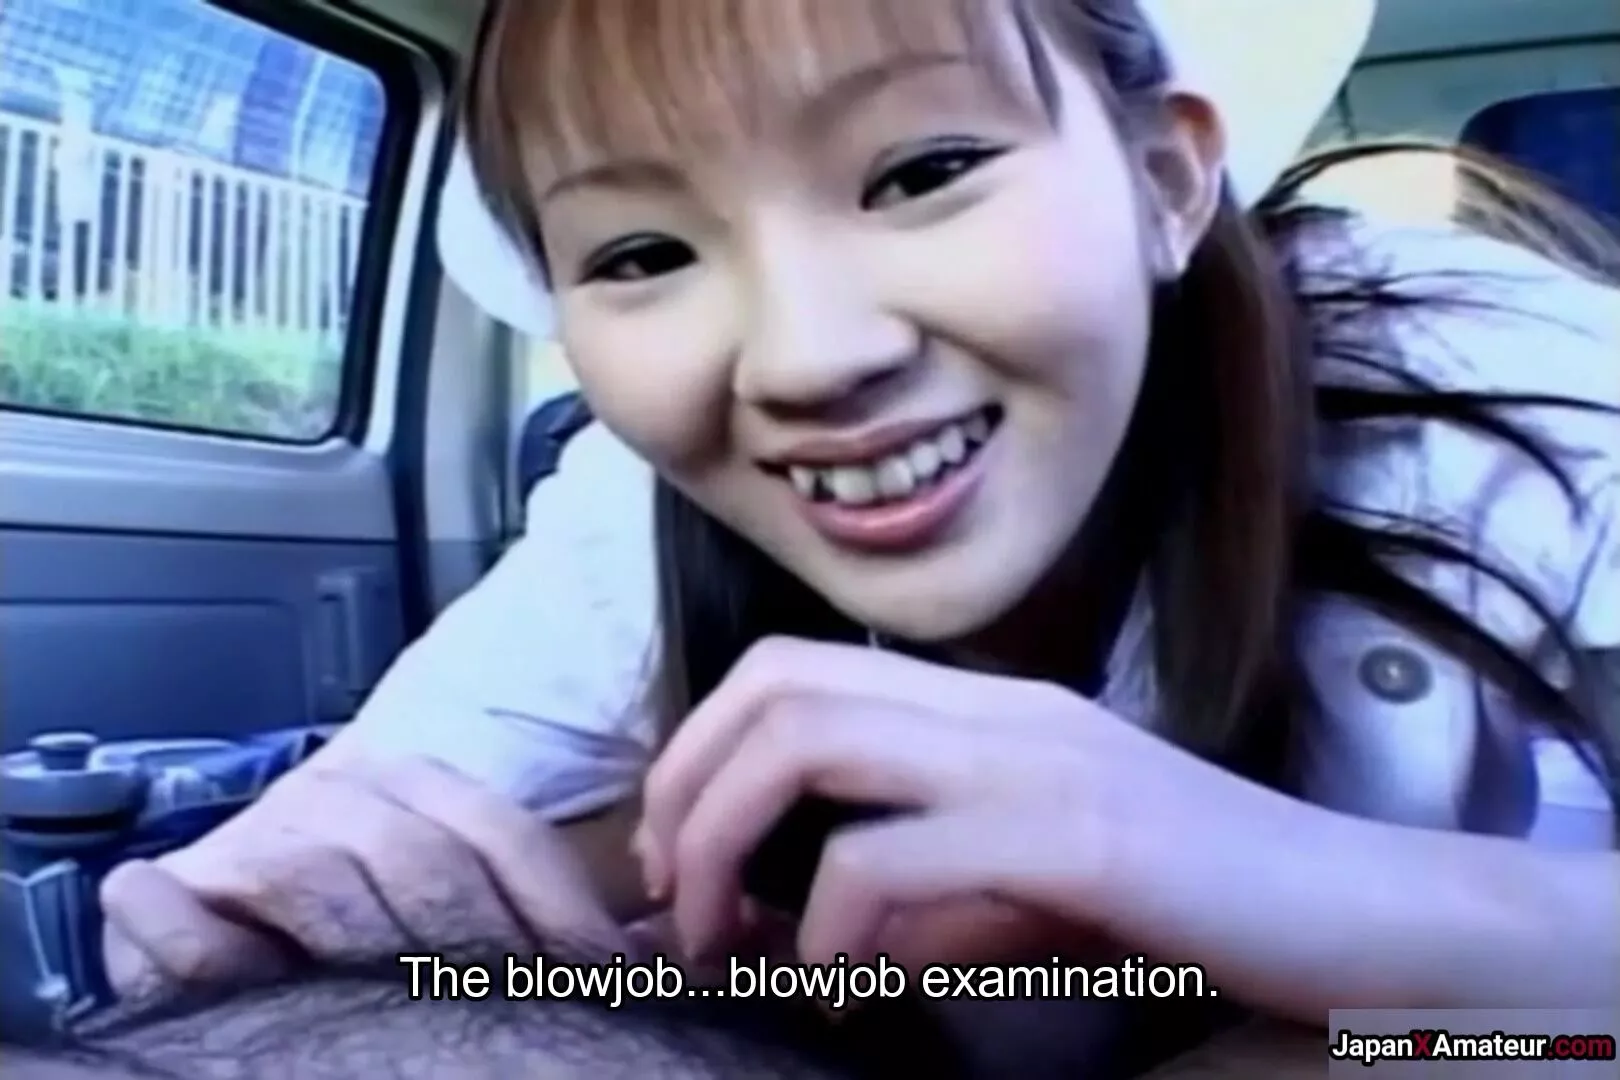 Japanese Nurse Giving A Blowjob Examination In A photo